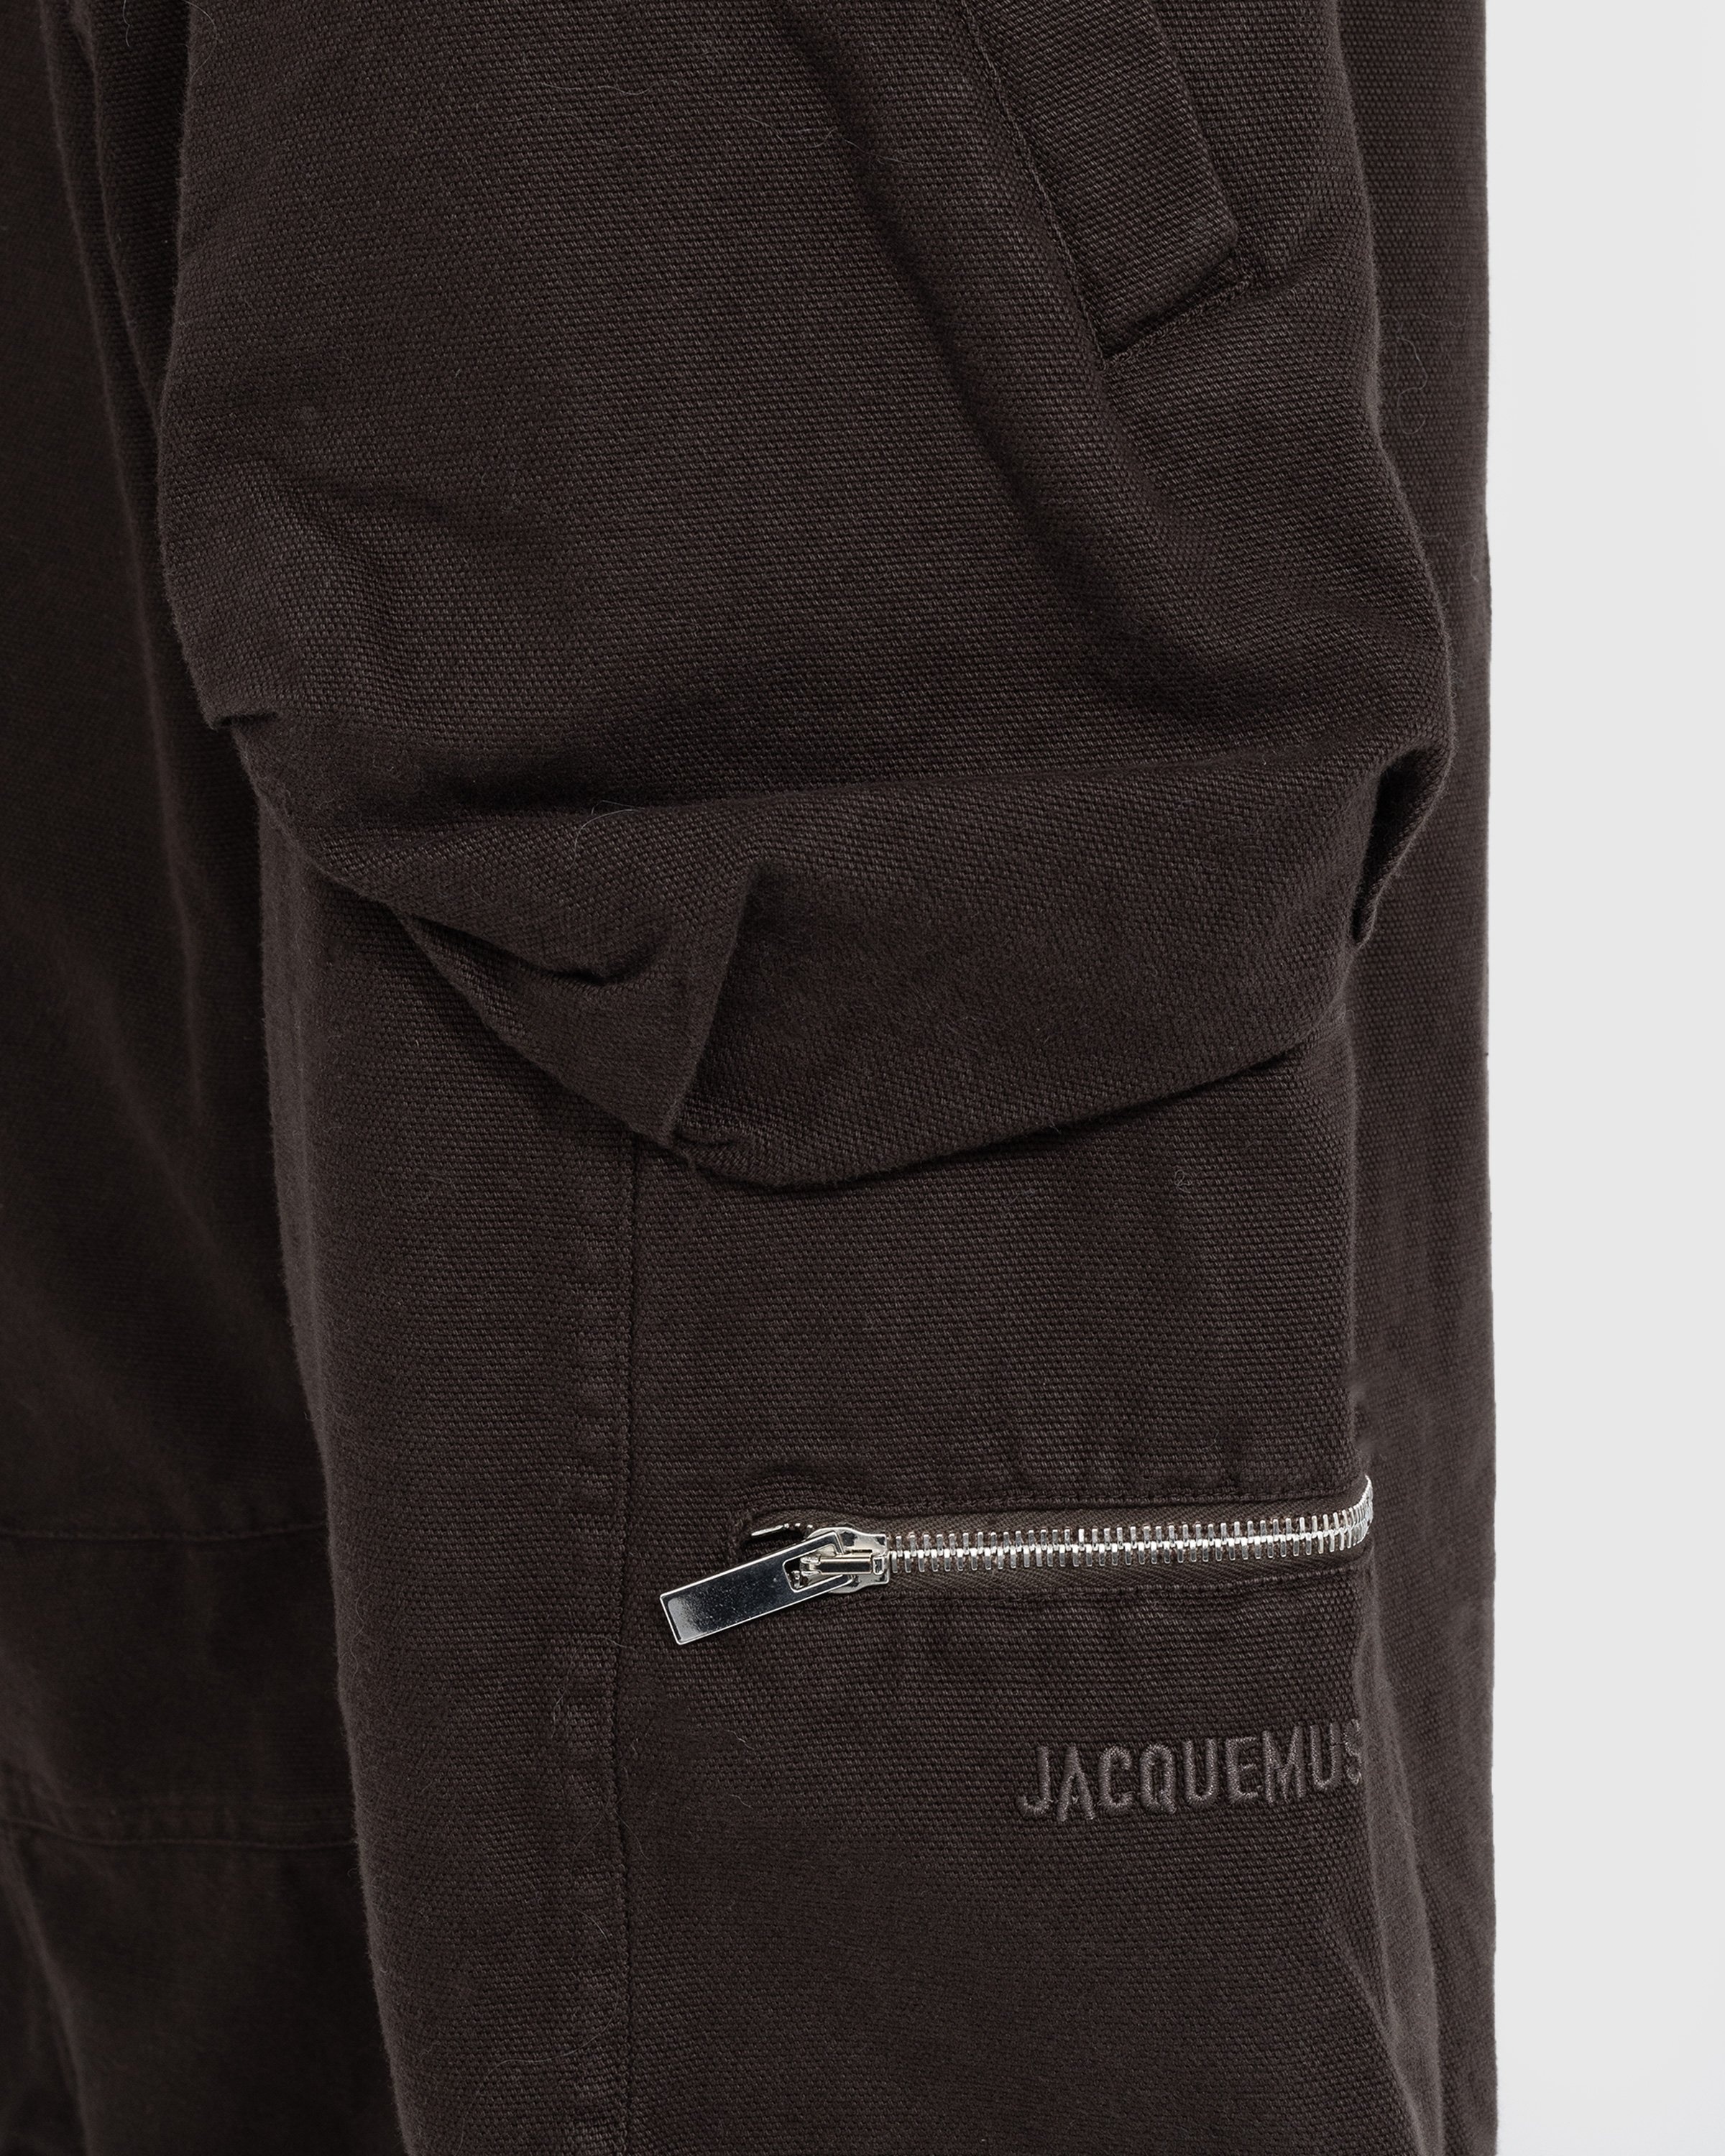 JACQUEMUS – Le Cargo Croissant Dark Brown - Pants - Brown - Image 4